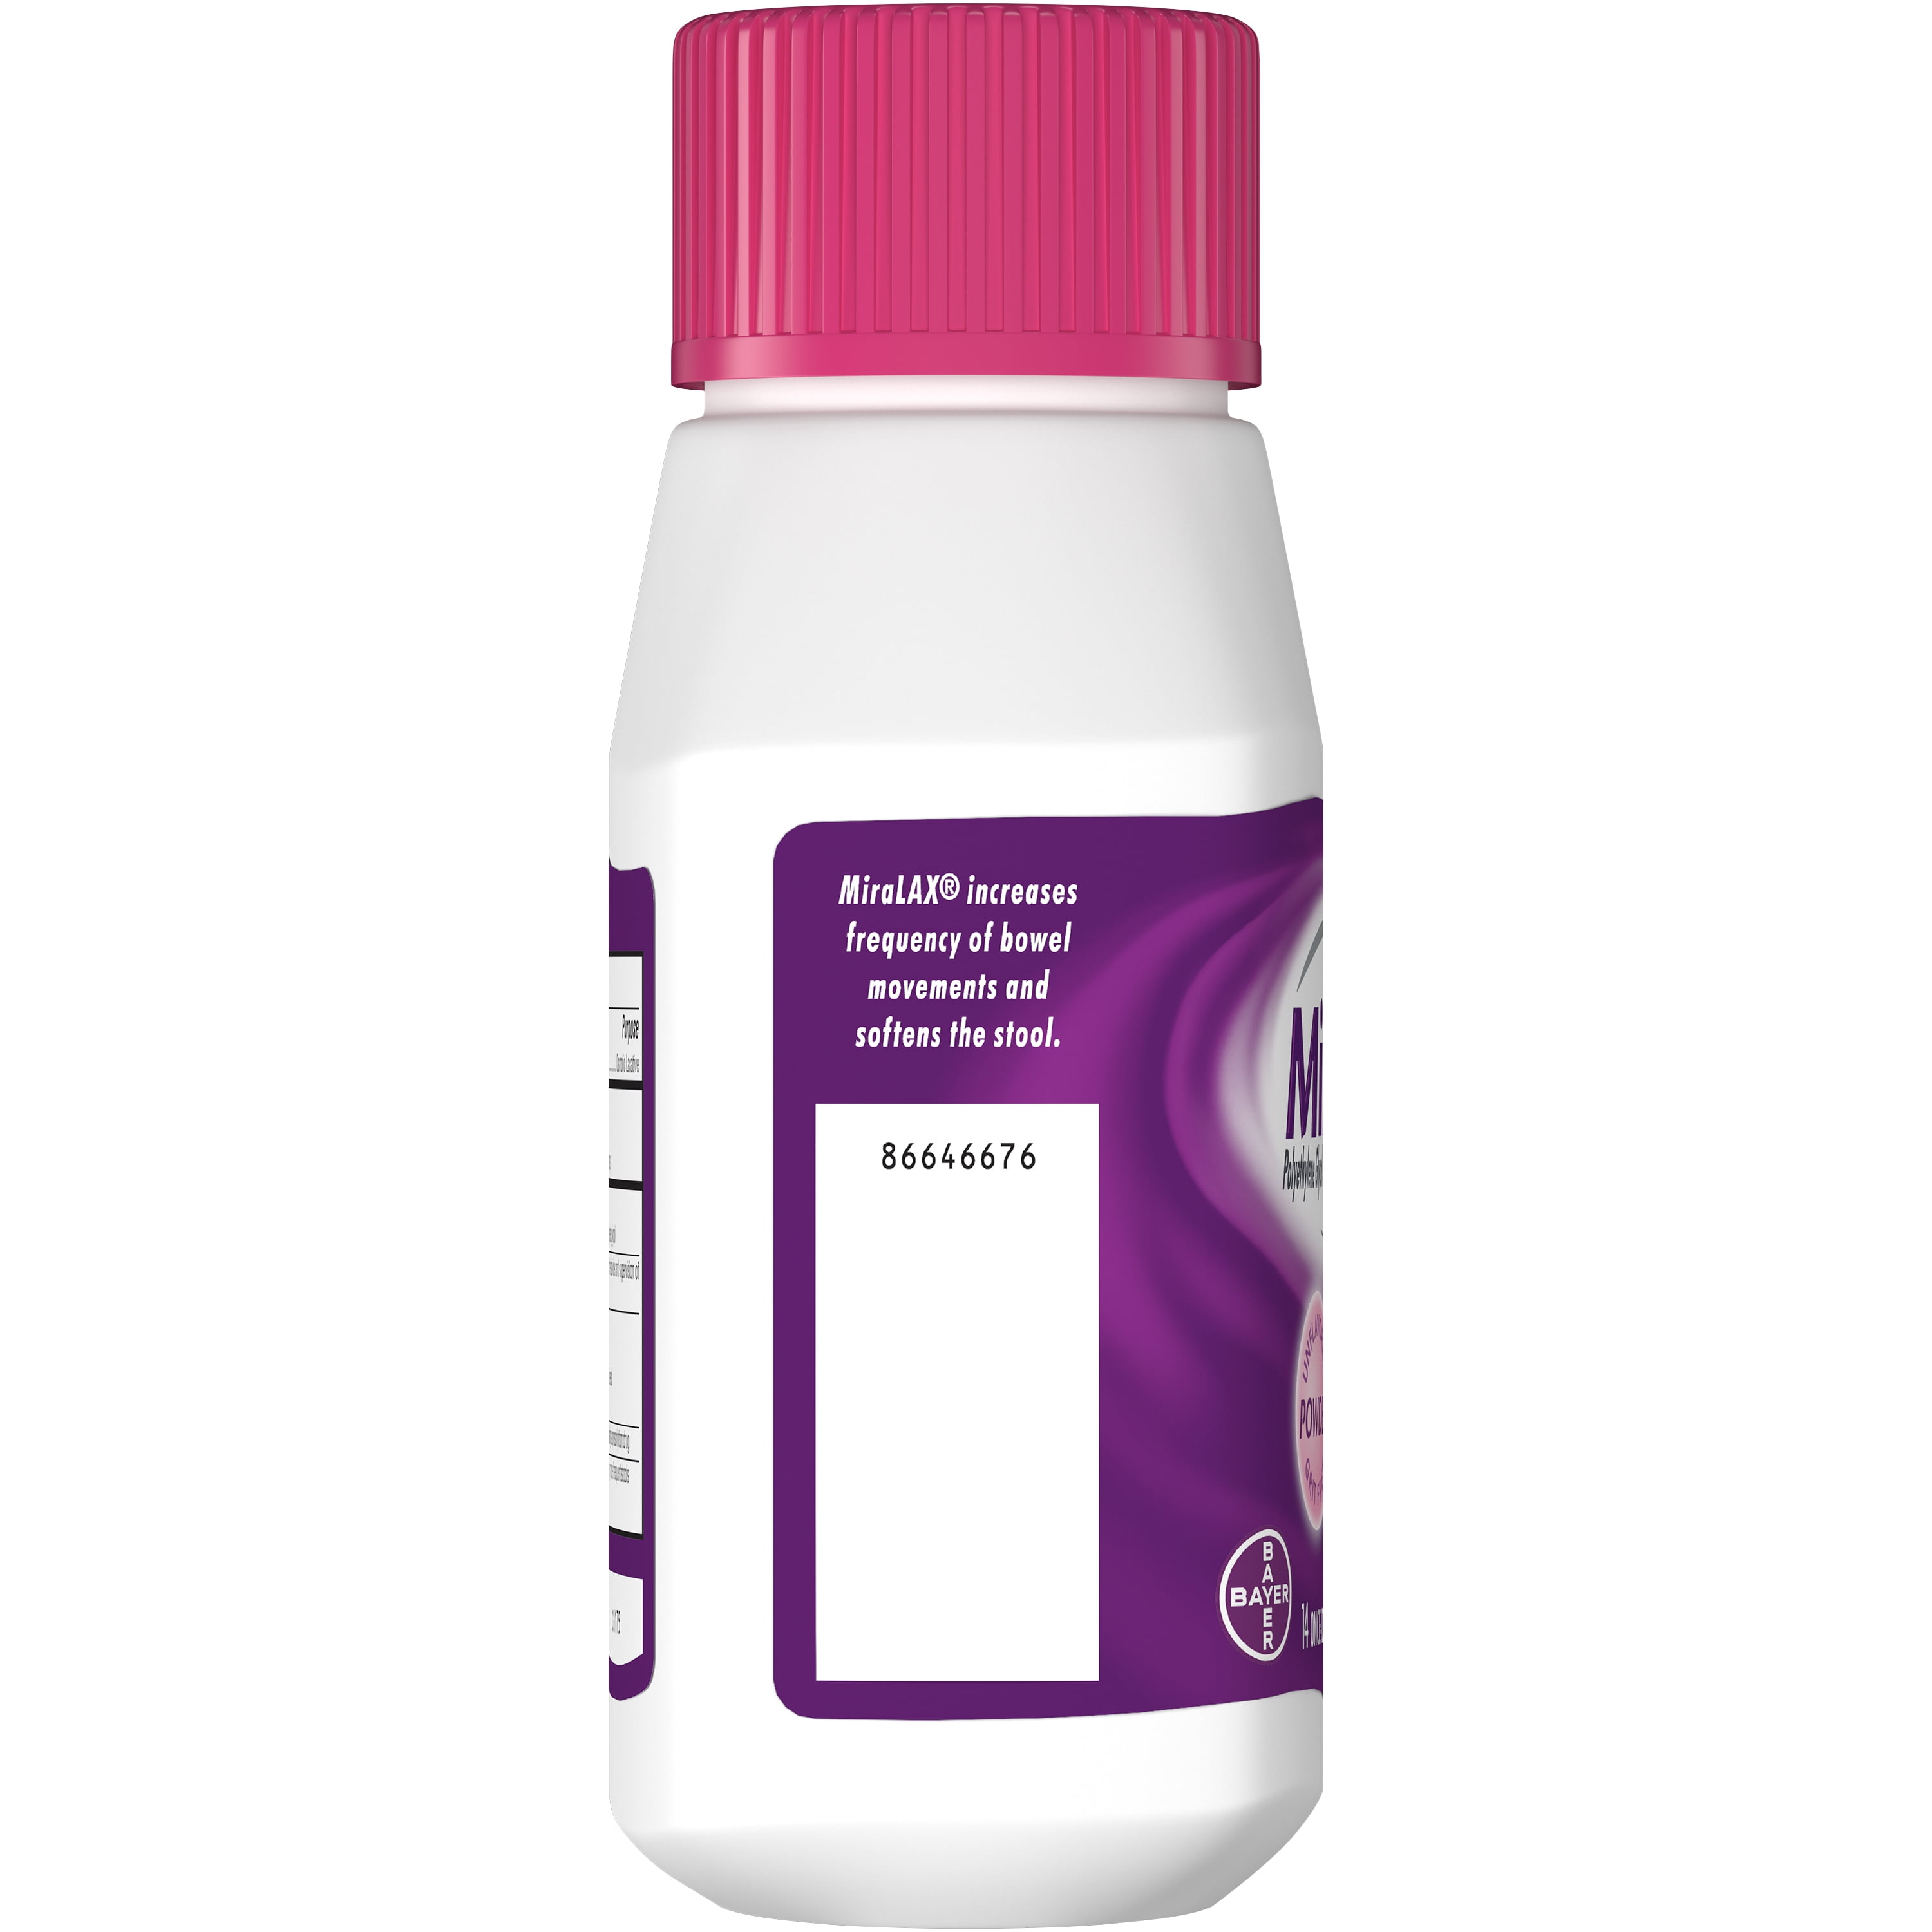 Miralax Laxative Powder For Gentle Constipation Relief 14 Doses Walmart Com Walmart Com